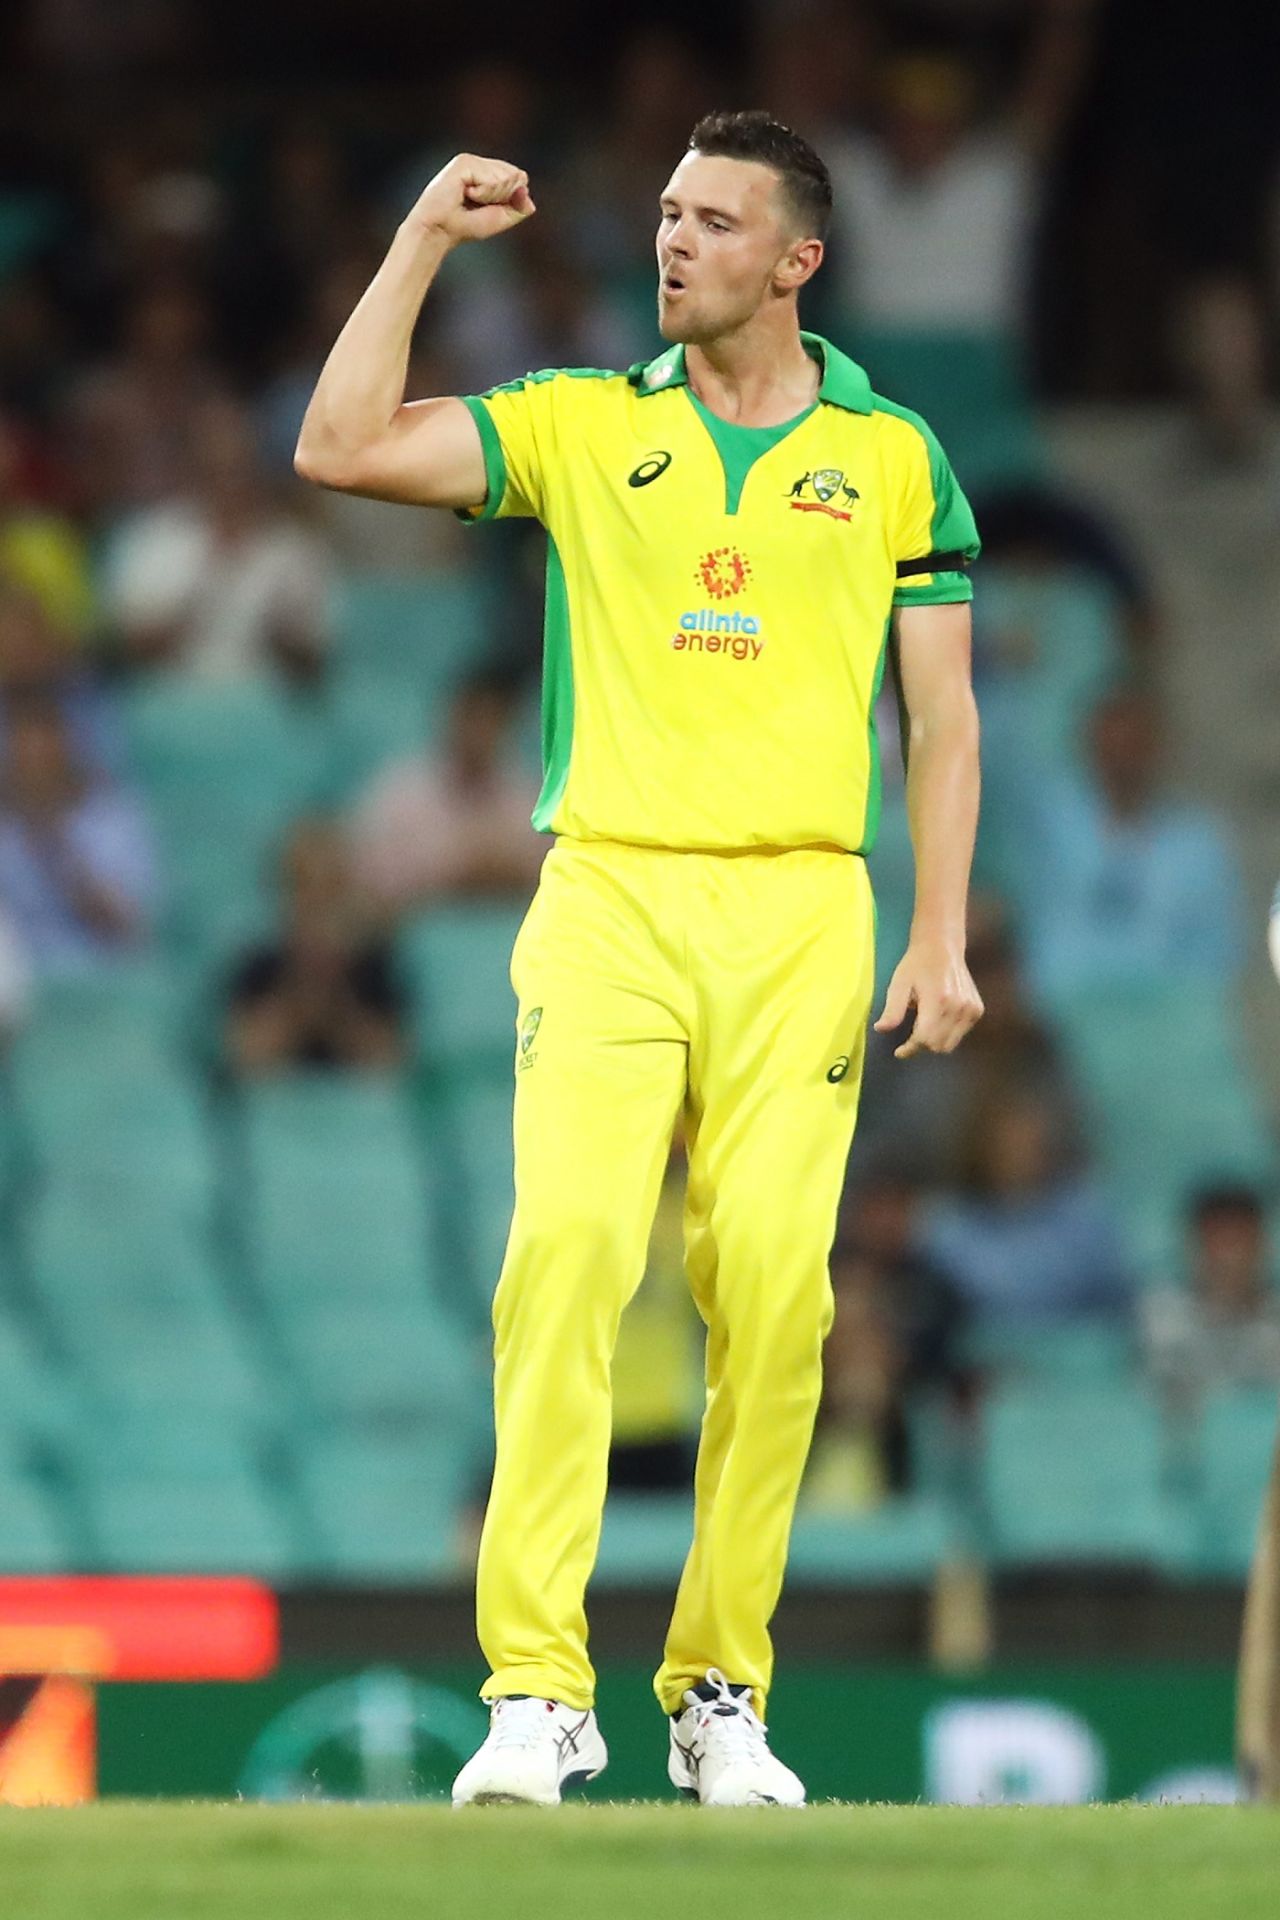 A fist pump after a successful over for Josh Hazlewood, Sydney, Australia vs India, 1st ODI, November 27, 2020